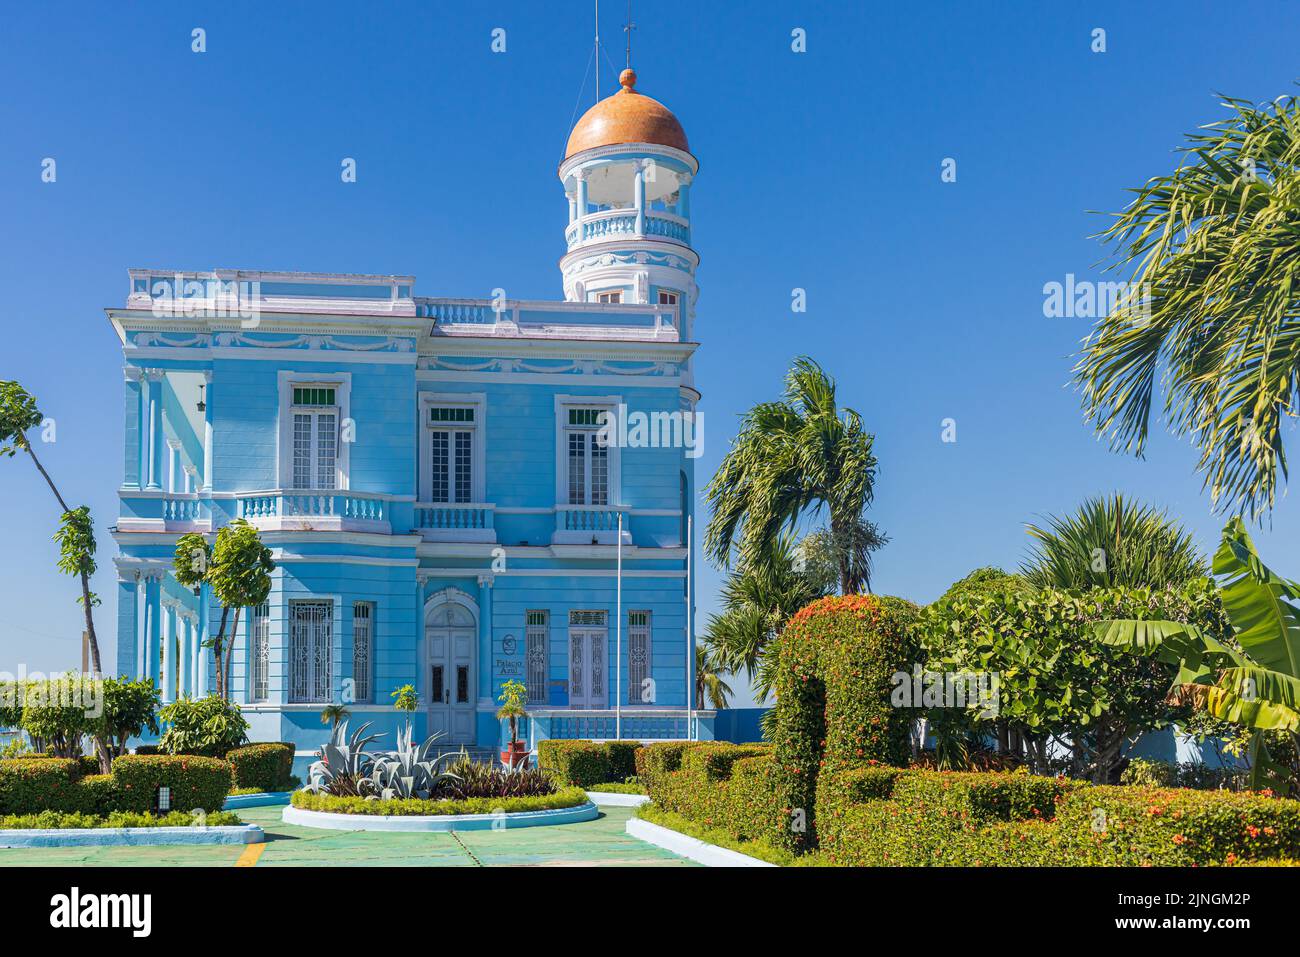 CIENFUEGOS, CUBA - JANUARY 10, 2021: Hotel Palacio Azul, an ecletic style palace in Cienfuegos, Cuba Stock Photo